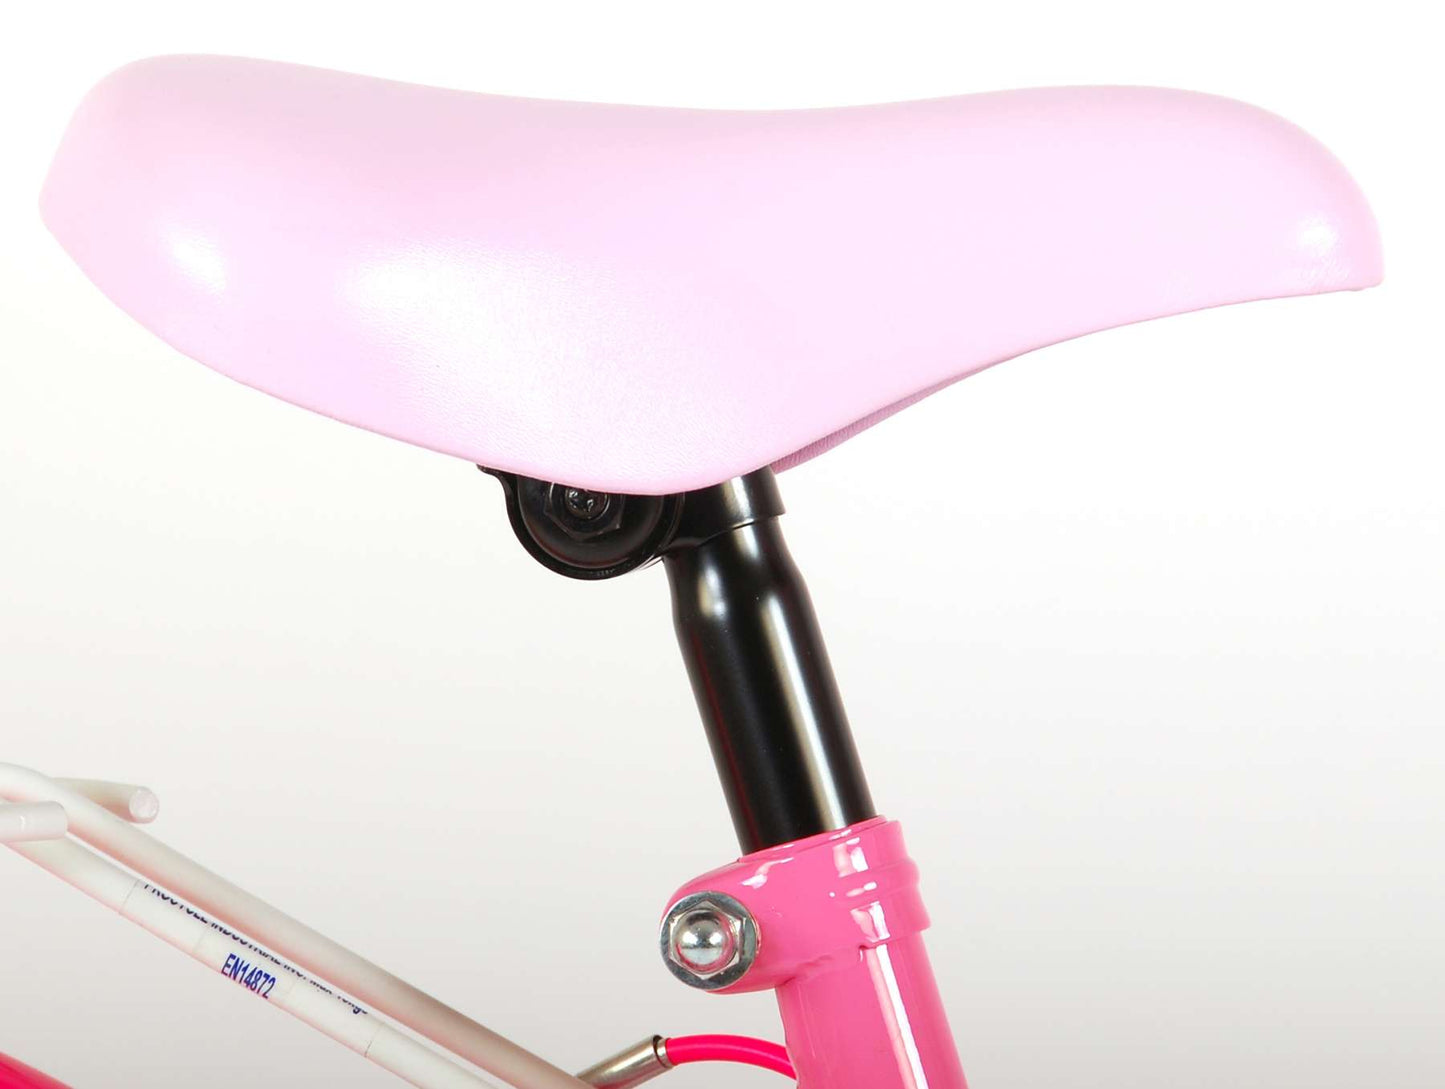 LOL Surprish Children's Bicycle - Girls - 18 pollici - Pink - Due freni a mano